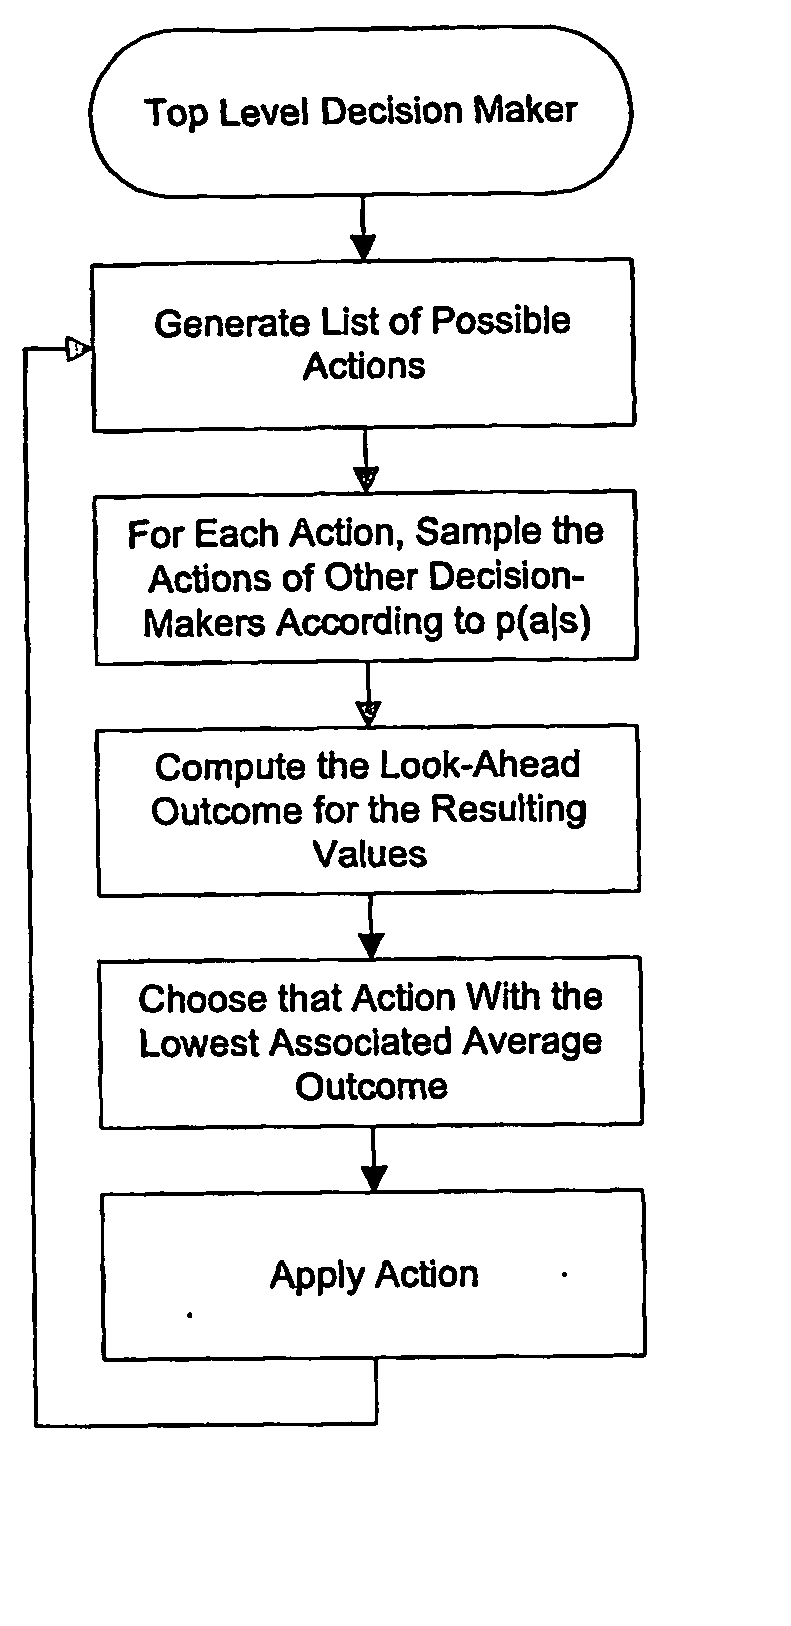 Optimizing active decision making using simulated decision making